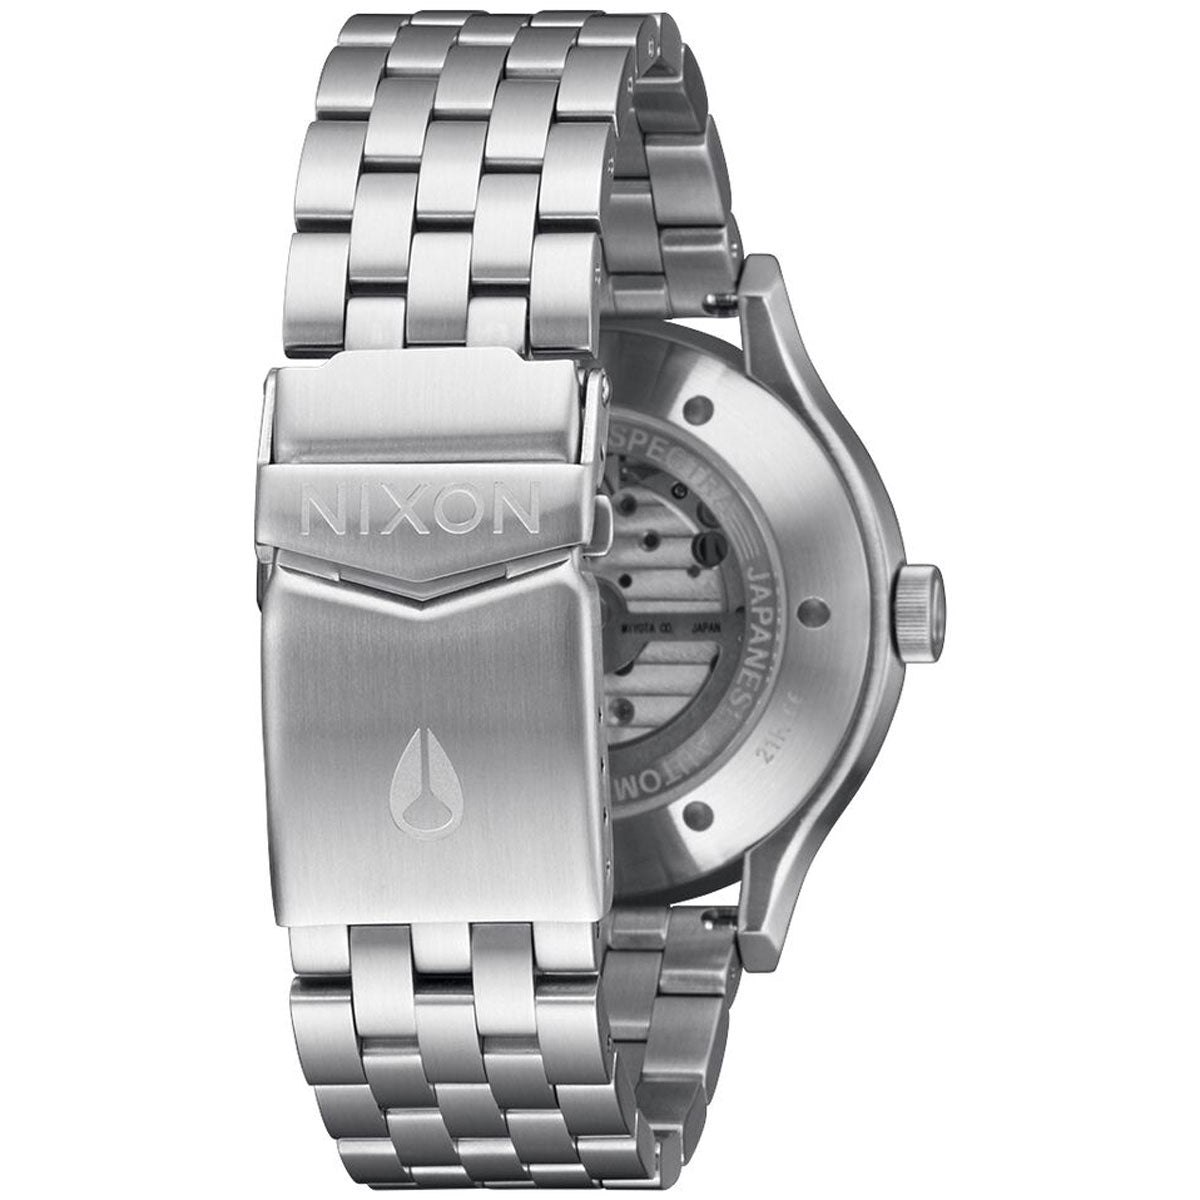 Nixon Spectra Watch - White/Silver image 3